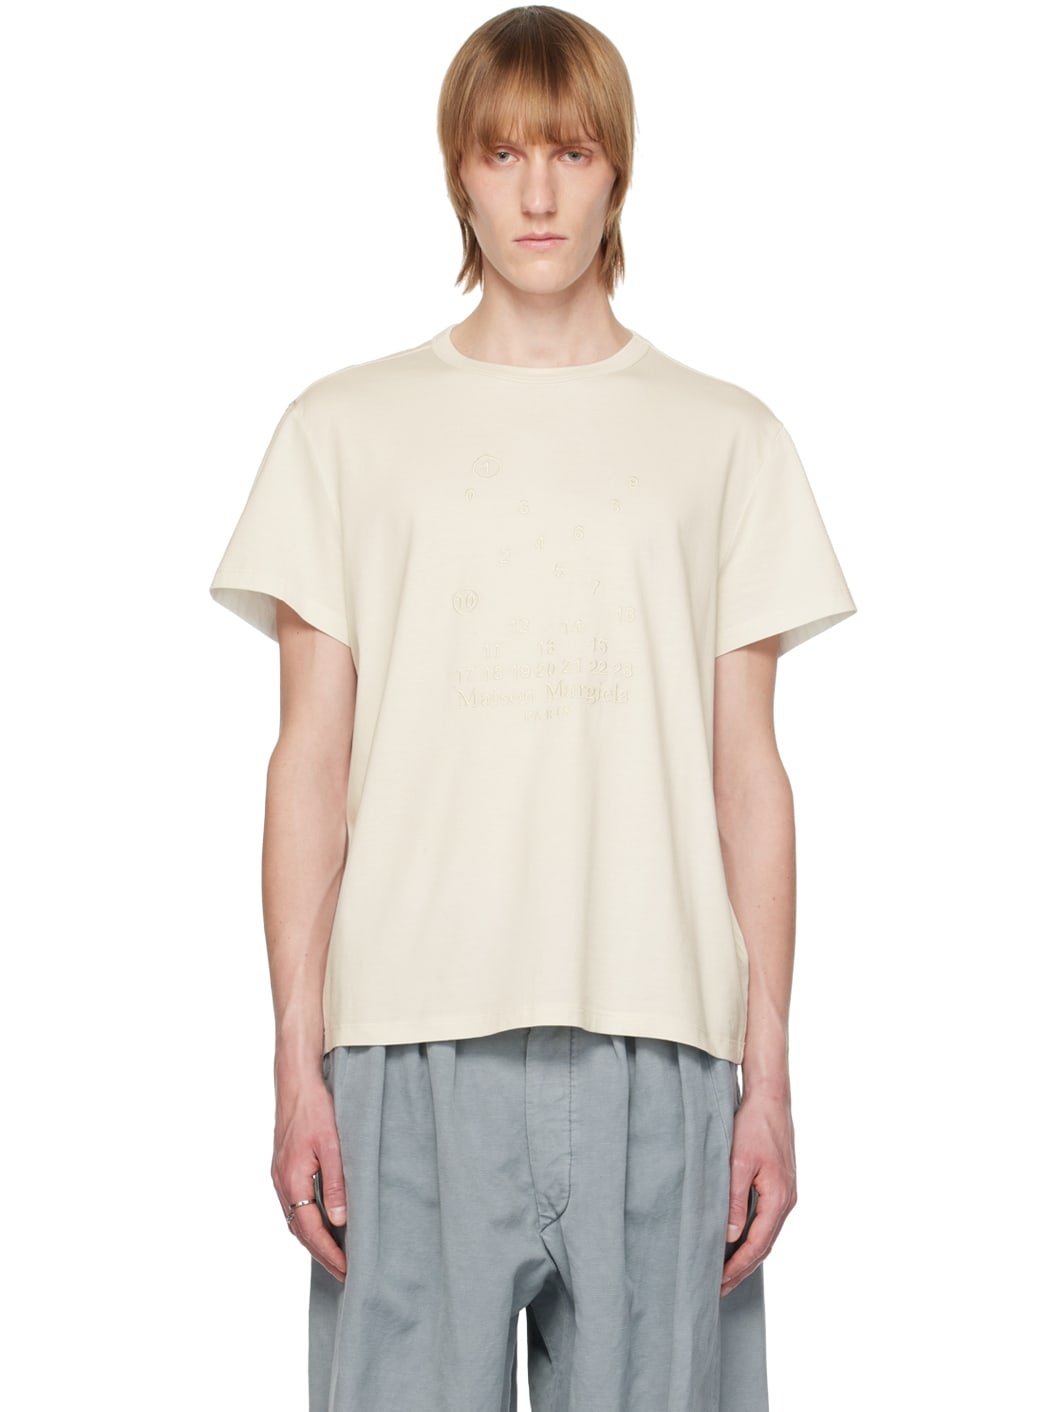 Off-White Numeric T-Shirt - 1